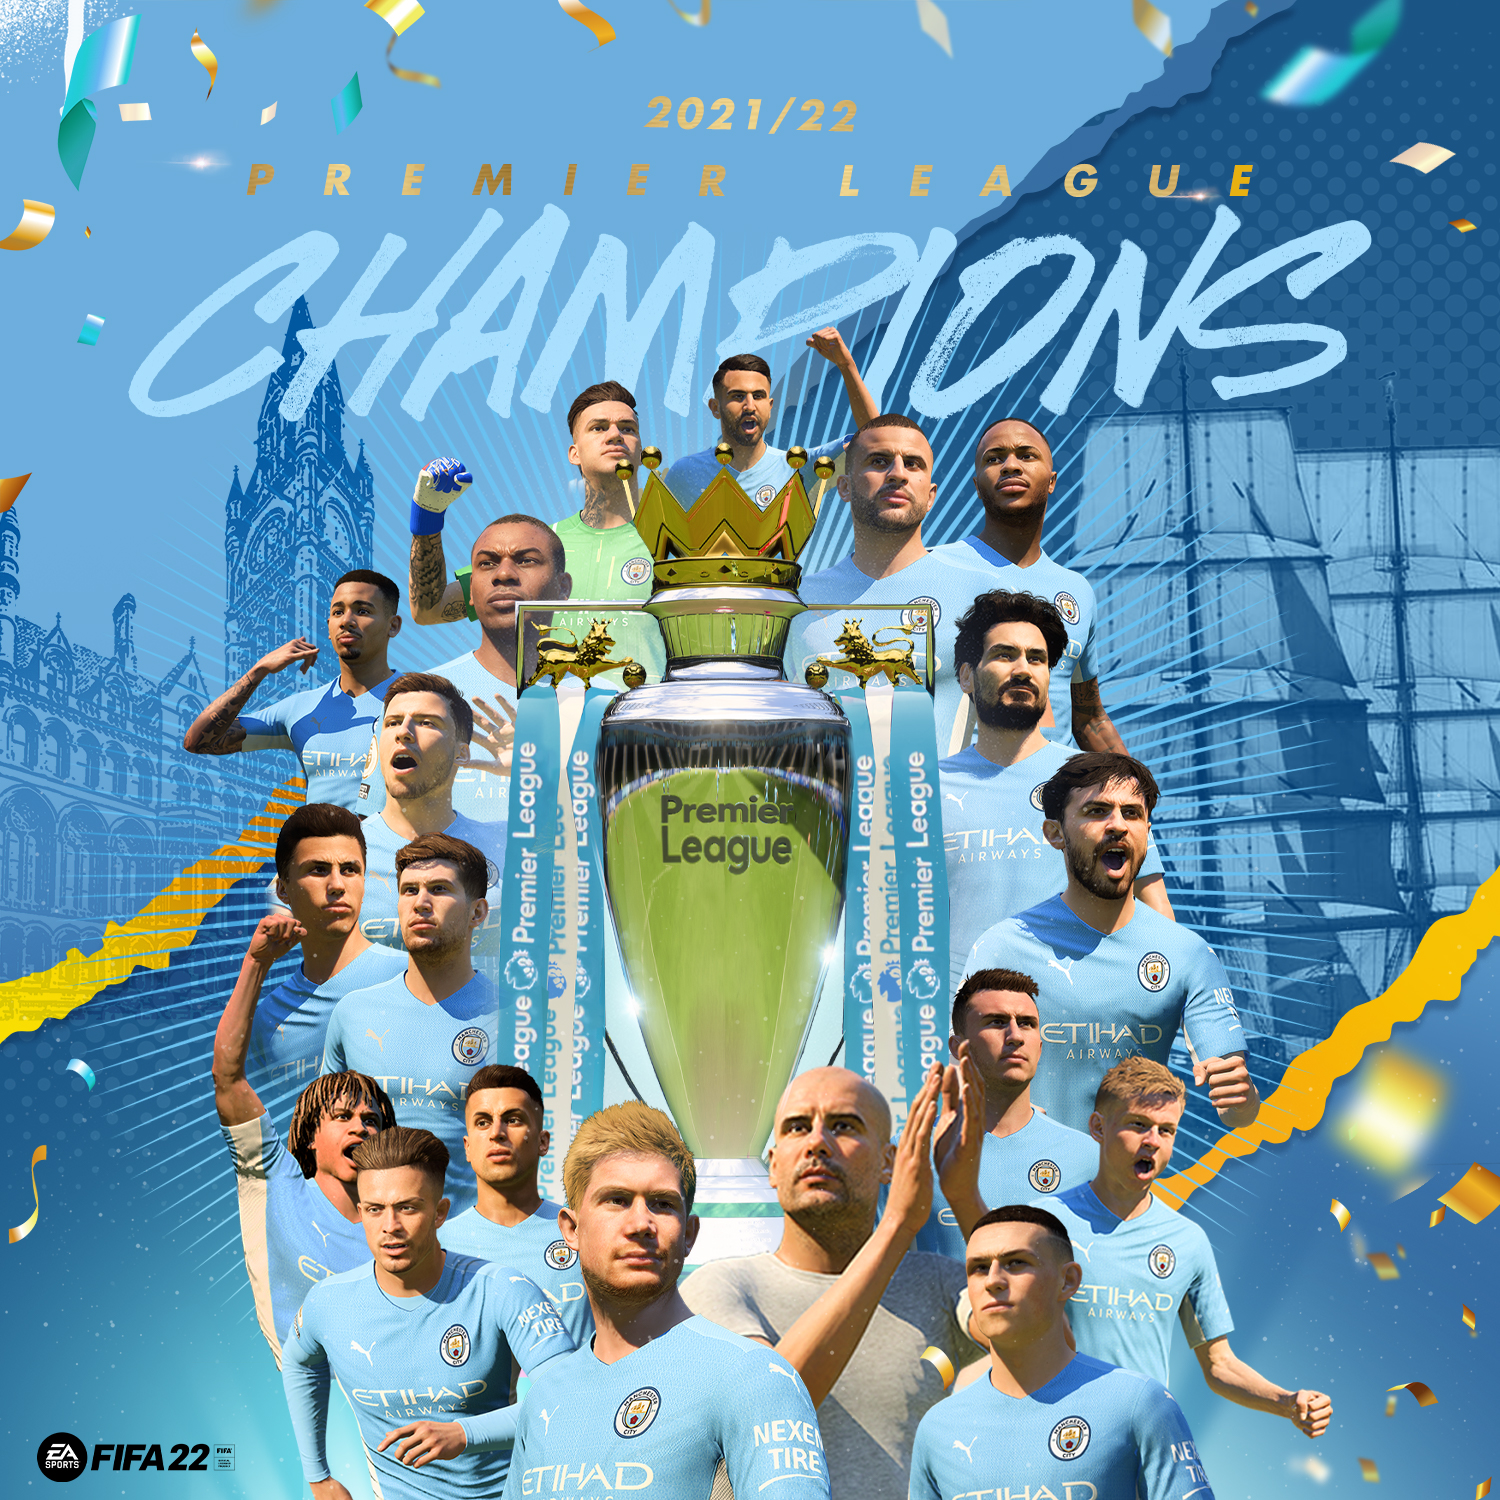 belastning Udlevering Tilladelse Manchester City on Twitter: "4️⃣ times in 5️⃣ seasons! 🙌 2021/22  @premierleague Champions 🏆 @EASPORTSFIFA #FIFA22 https://t.co/G2k8tgn7yr"  / Twitter